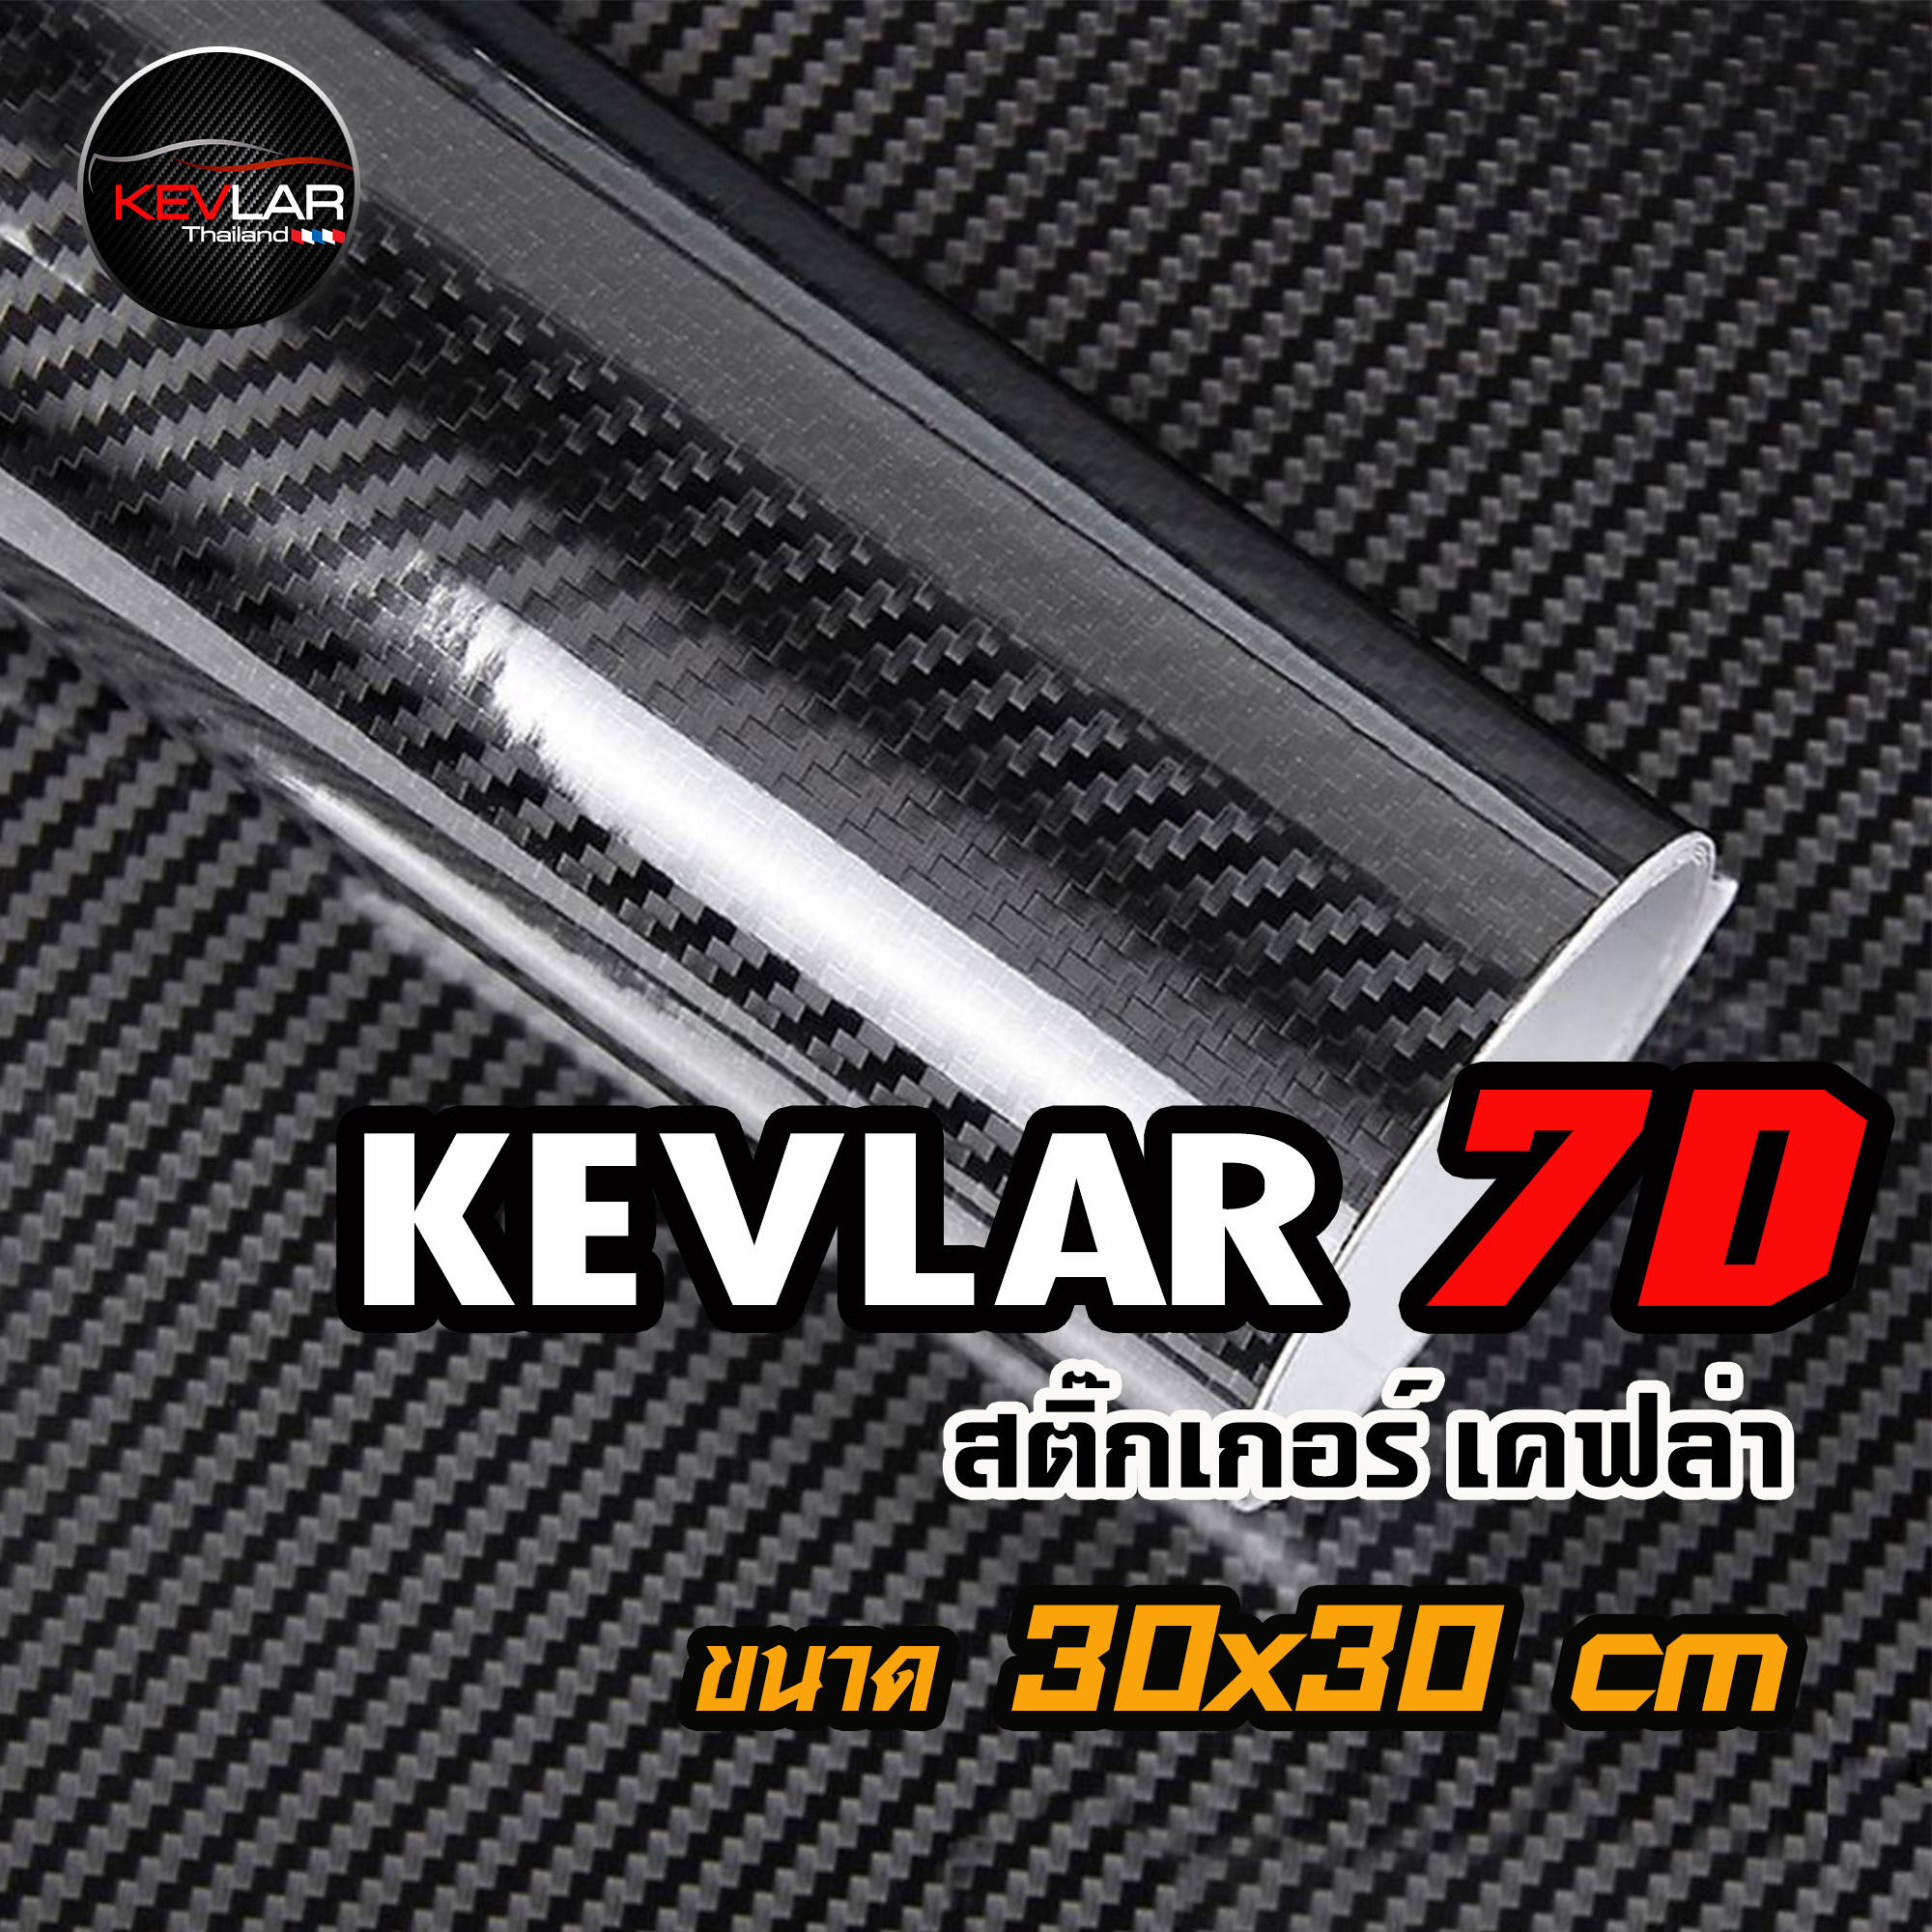 Sticker Kevlar carbon สติ๊กเกอร์ เคฟล่า คาร์บอน 7D คุณภาพสูง ขนาด 30x30 cm